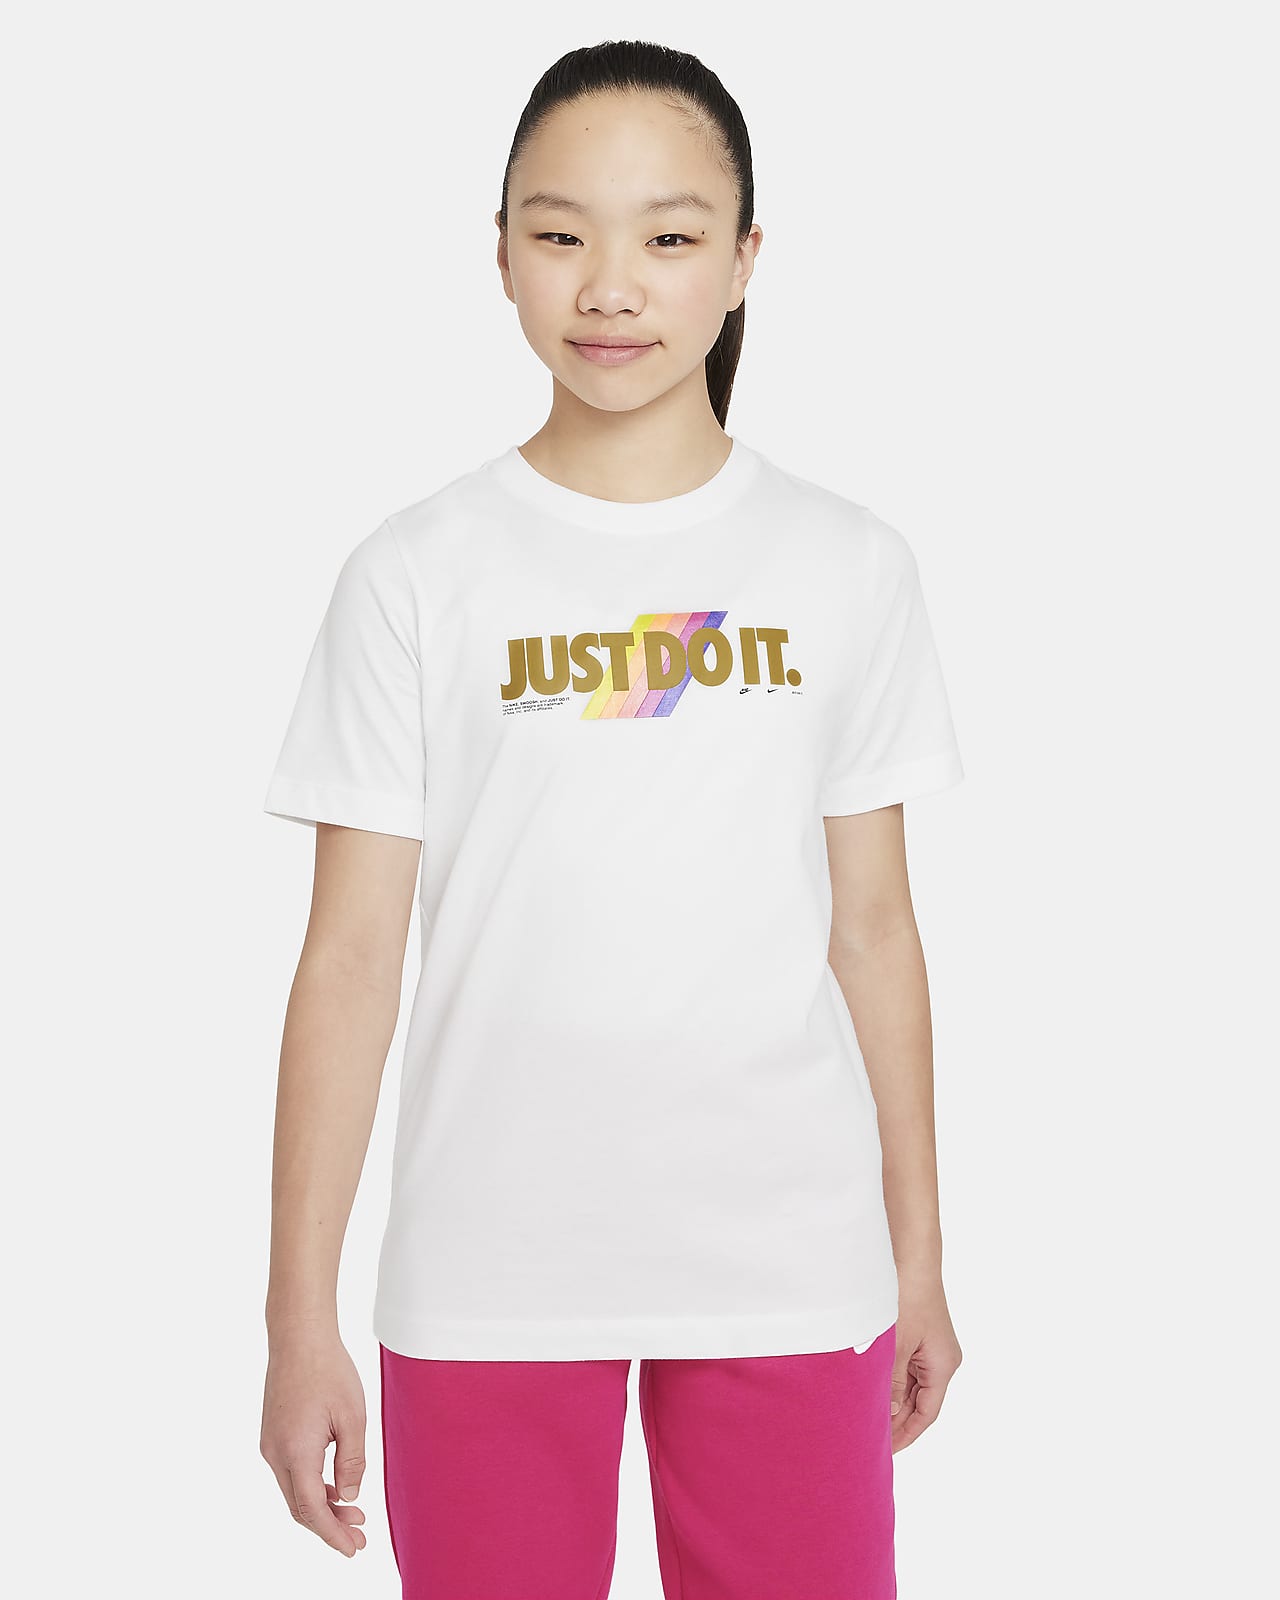 Kids Tops & T-Shirts. Nike IE